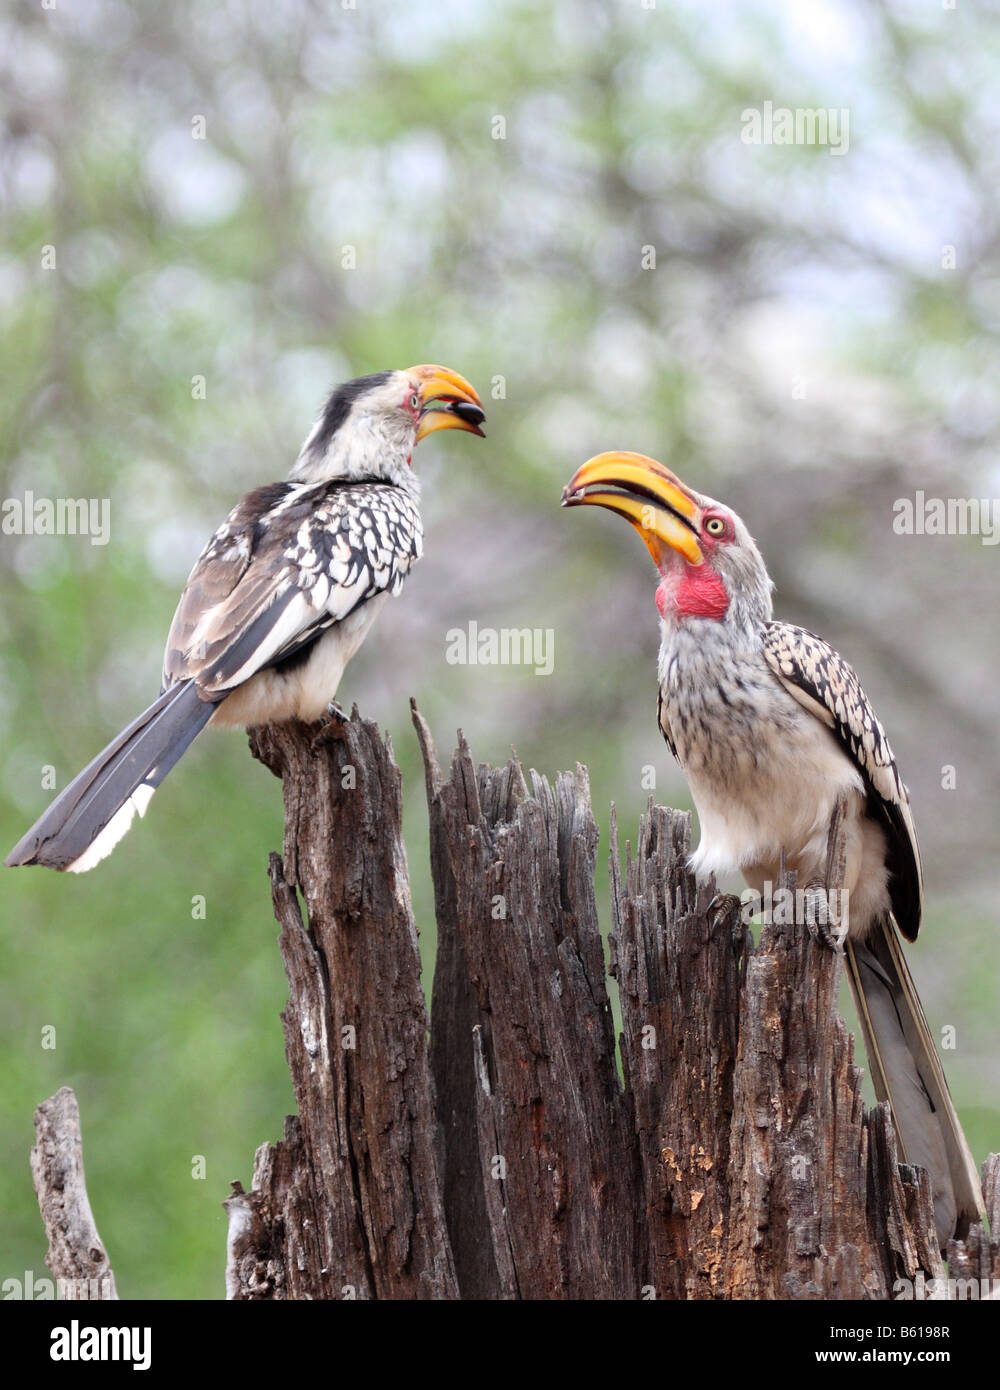 Southern yellowbilled hornbills condividendo un millepiedi Foto Stock